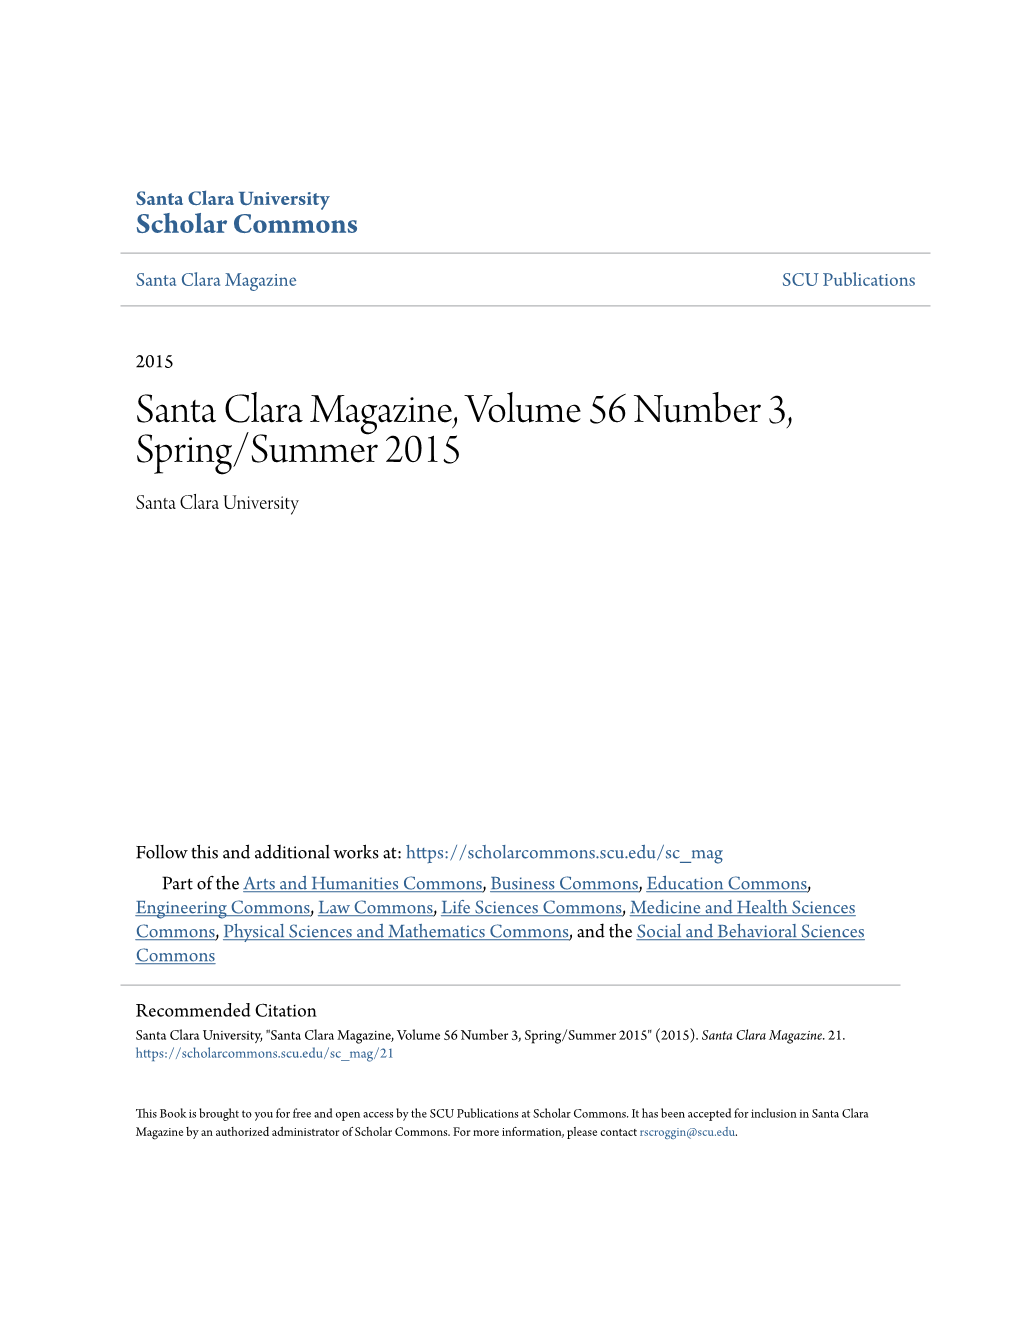 Santa Clara Magazine, Volume 56 Number 3, Spring/Summer 2015 Santa Clara University